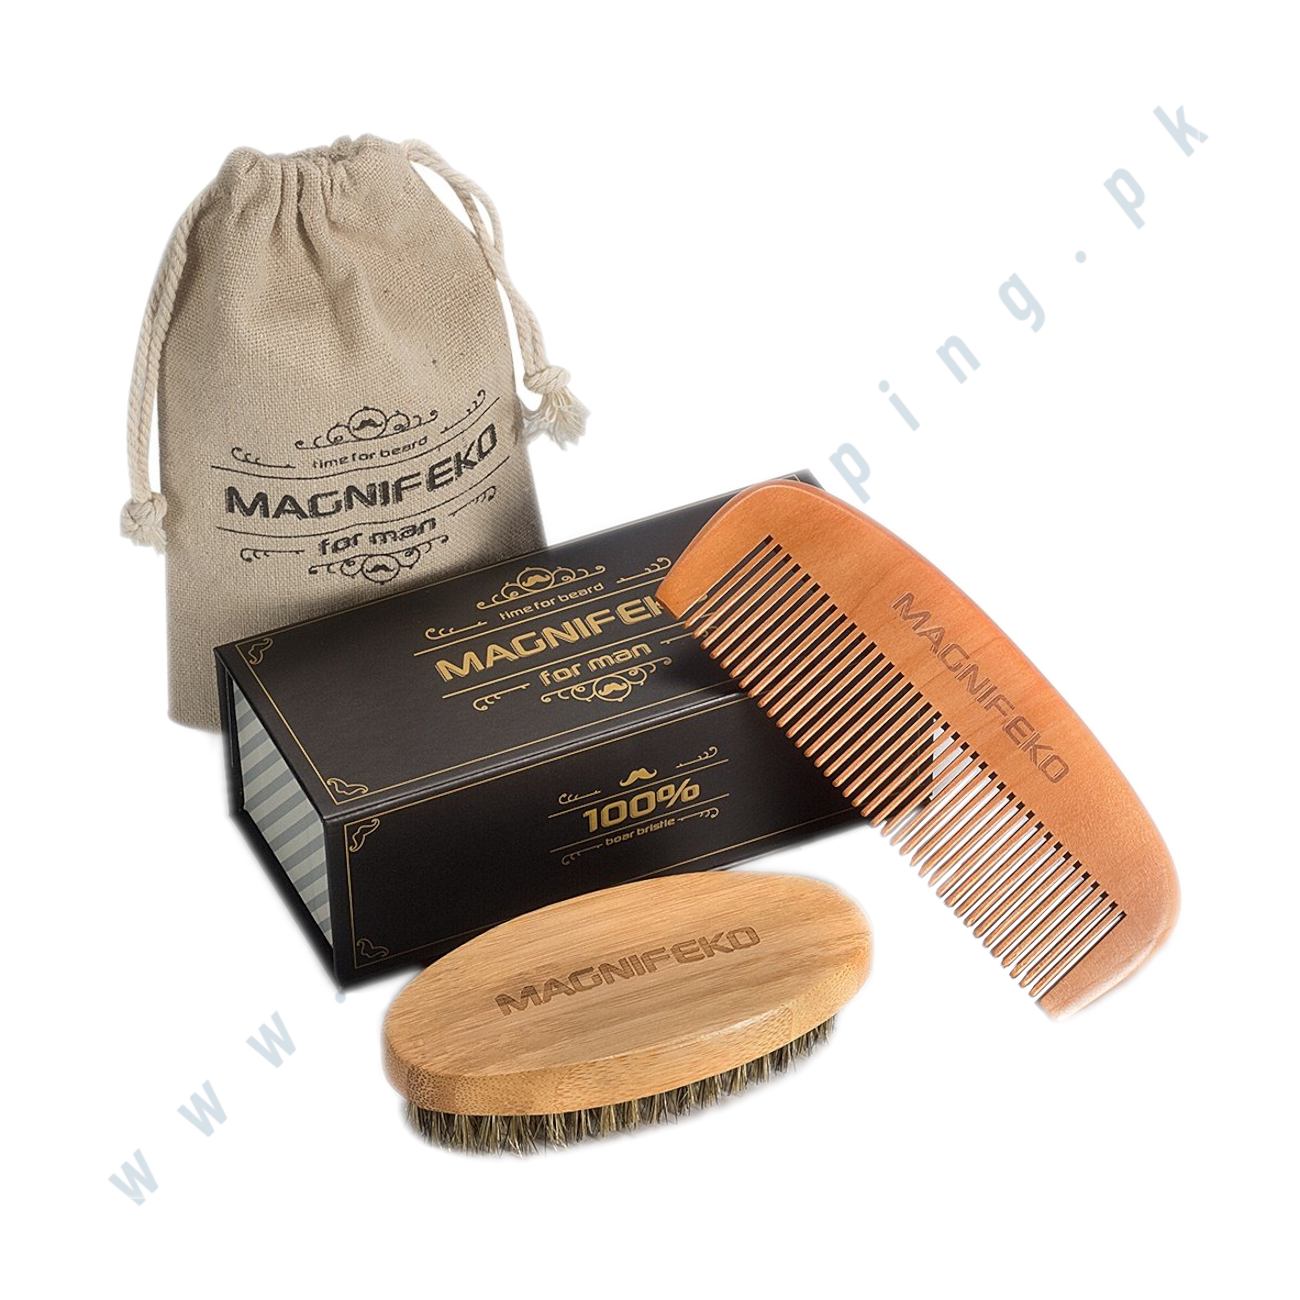 Magnifeko's Beard Comb and Brush Grooming Set: The